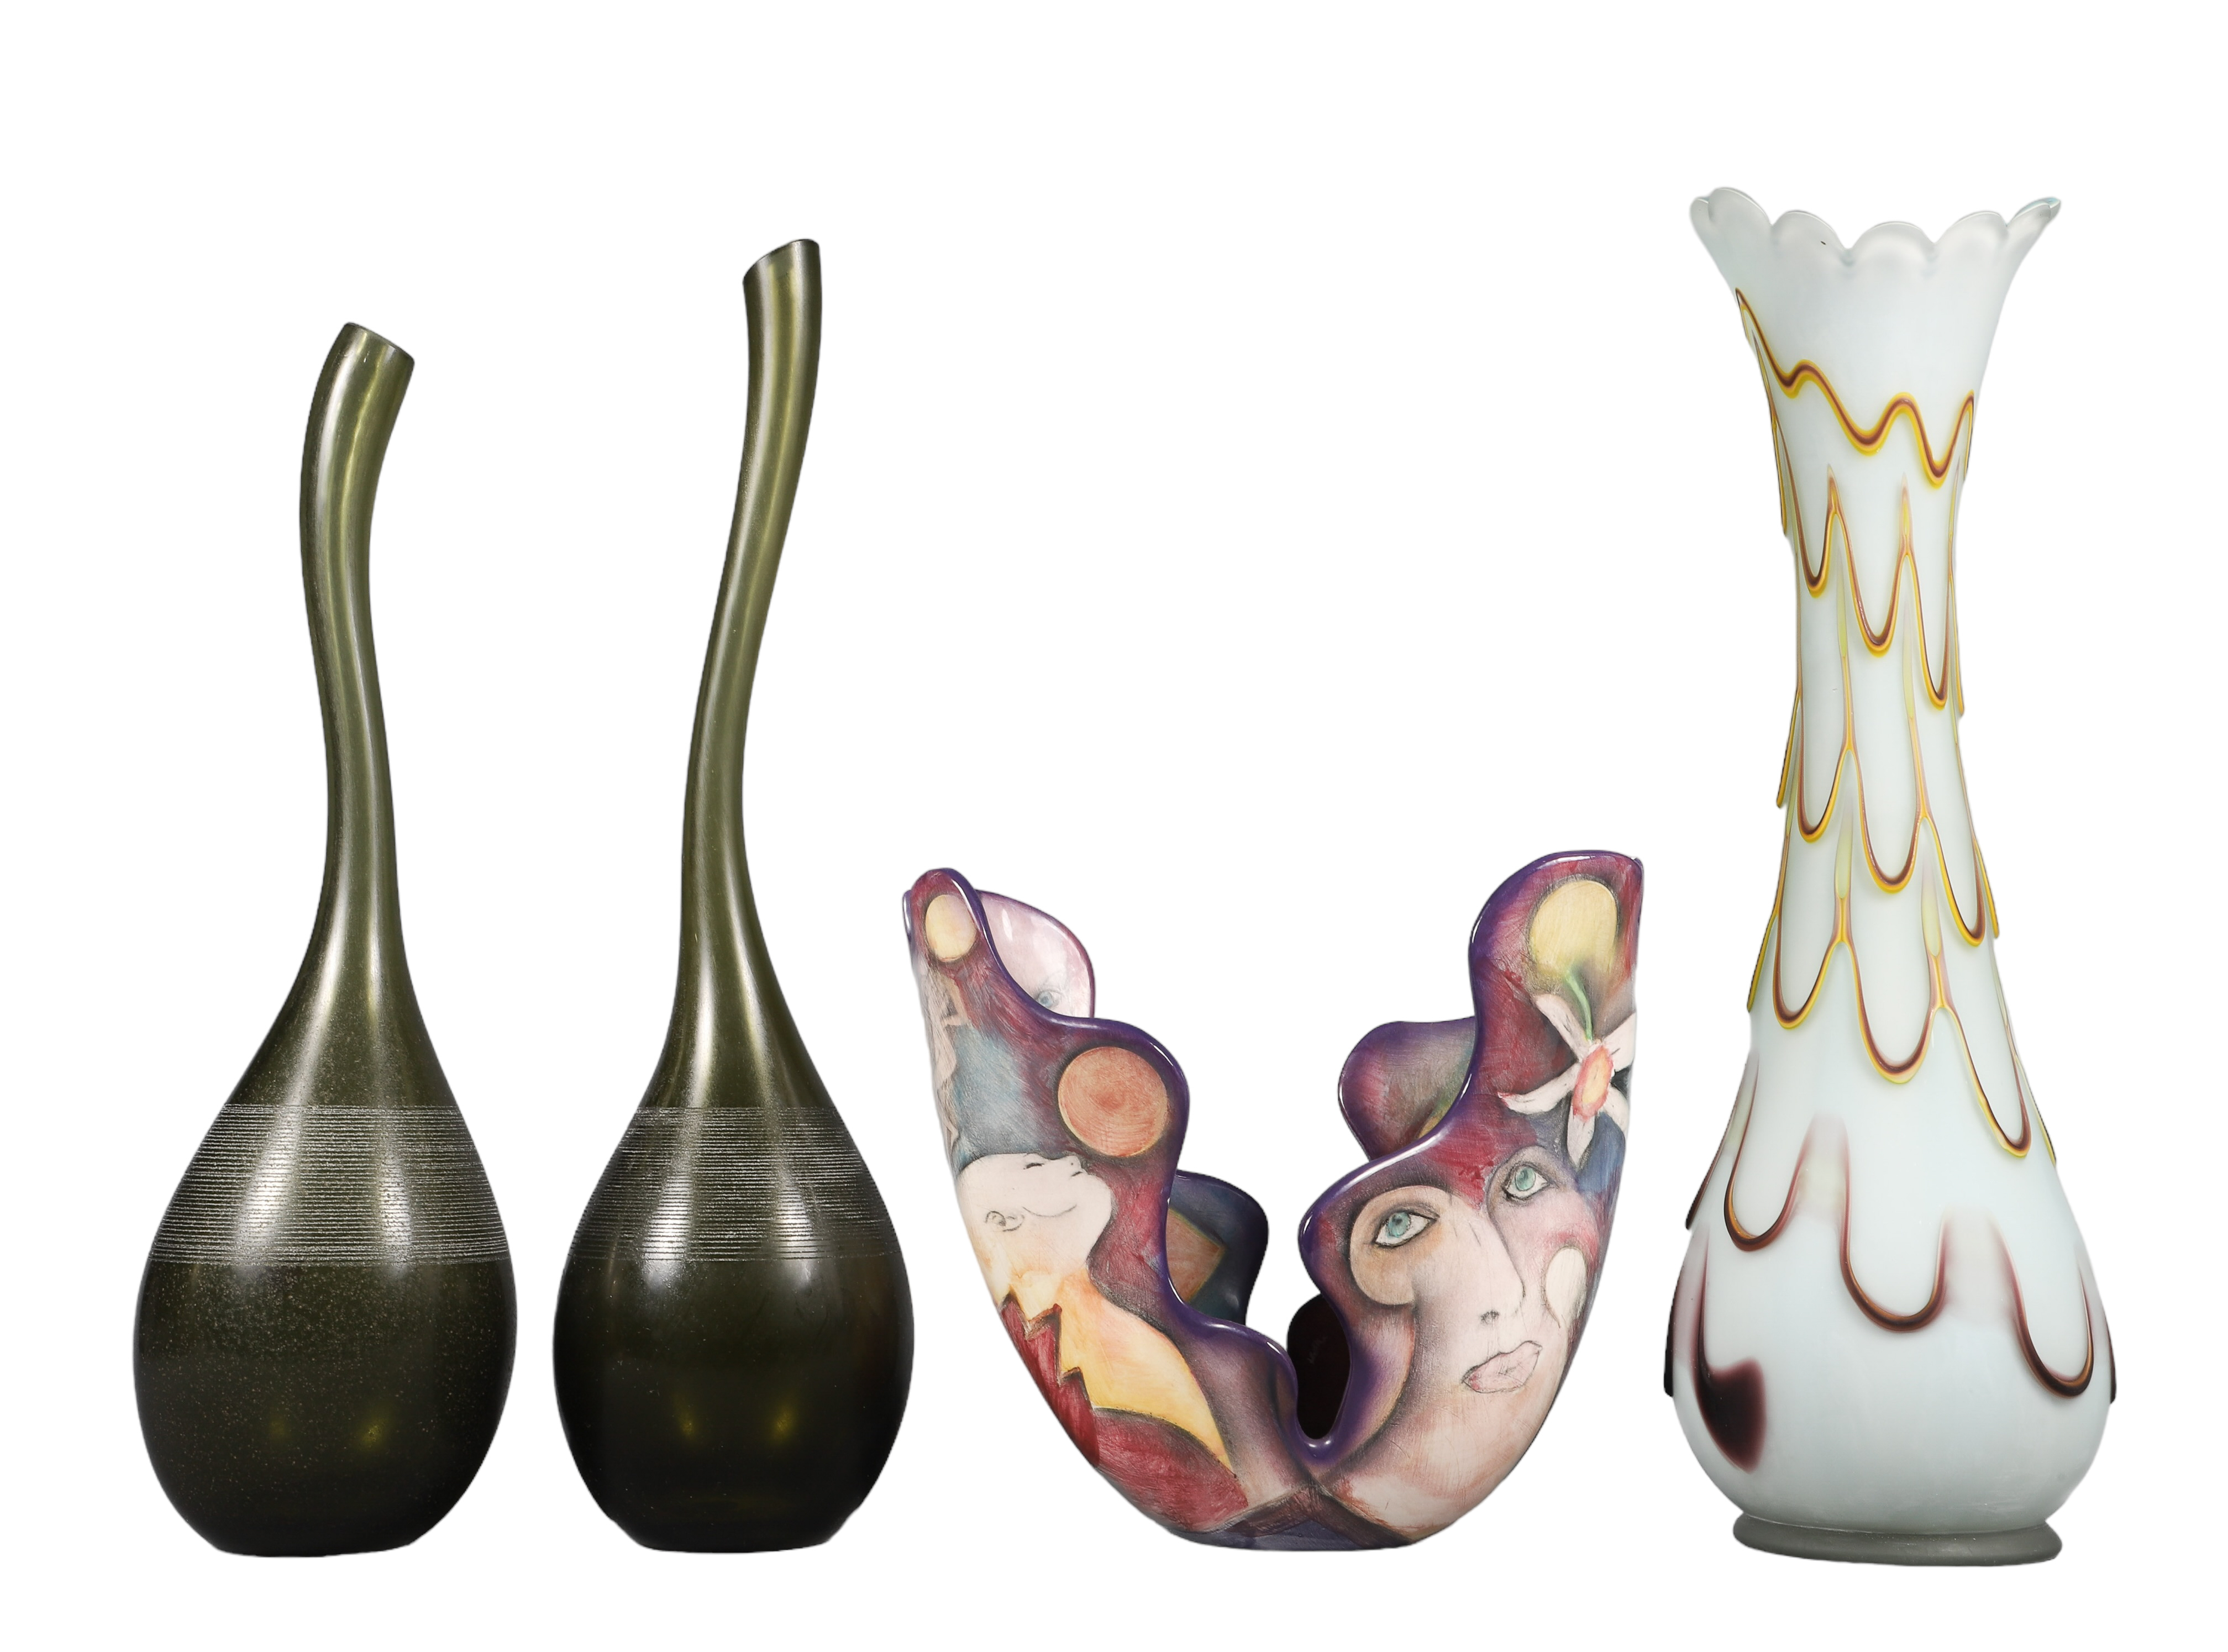 Art Glass and porcelain vases to 2e1e2c